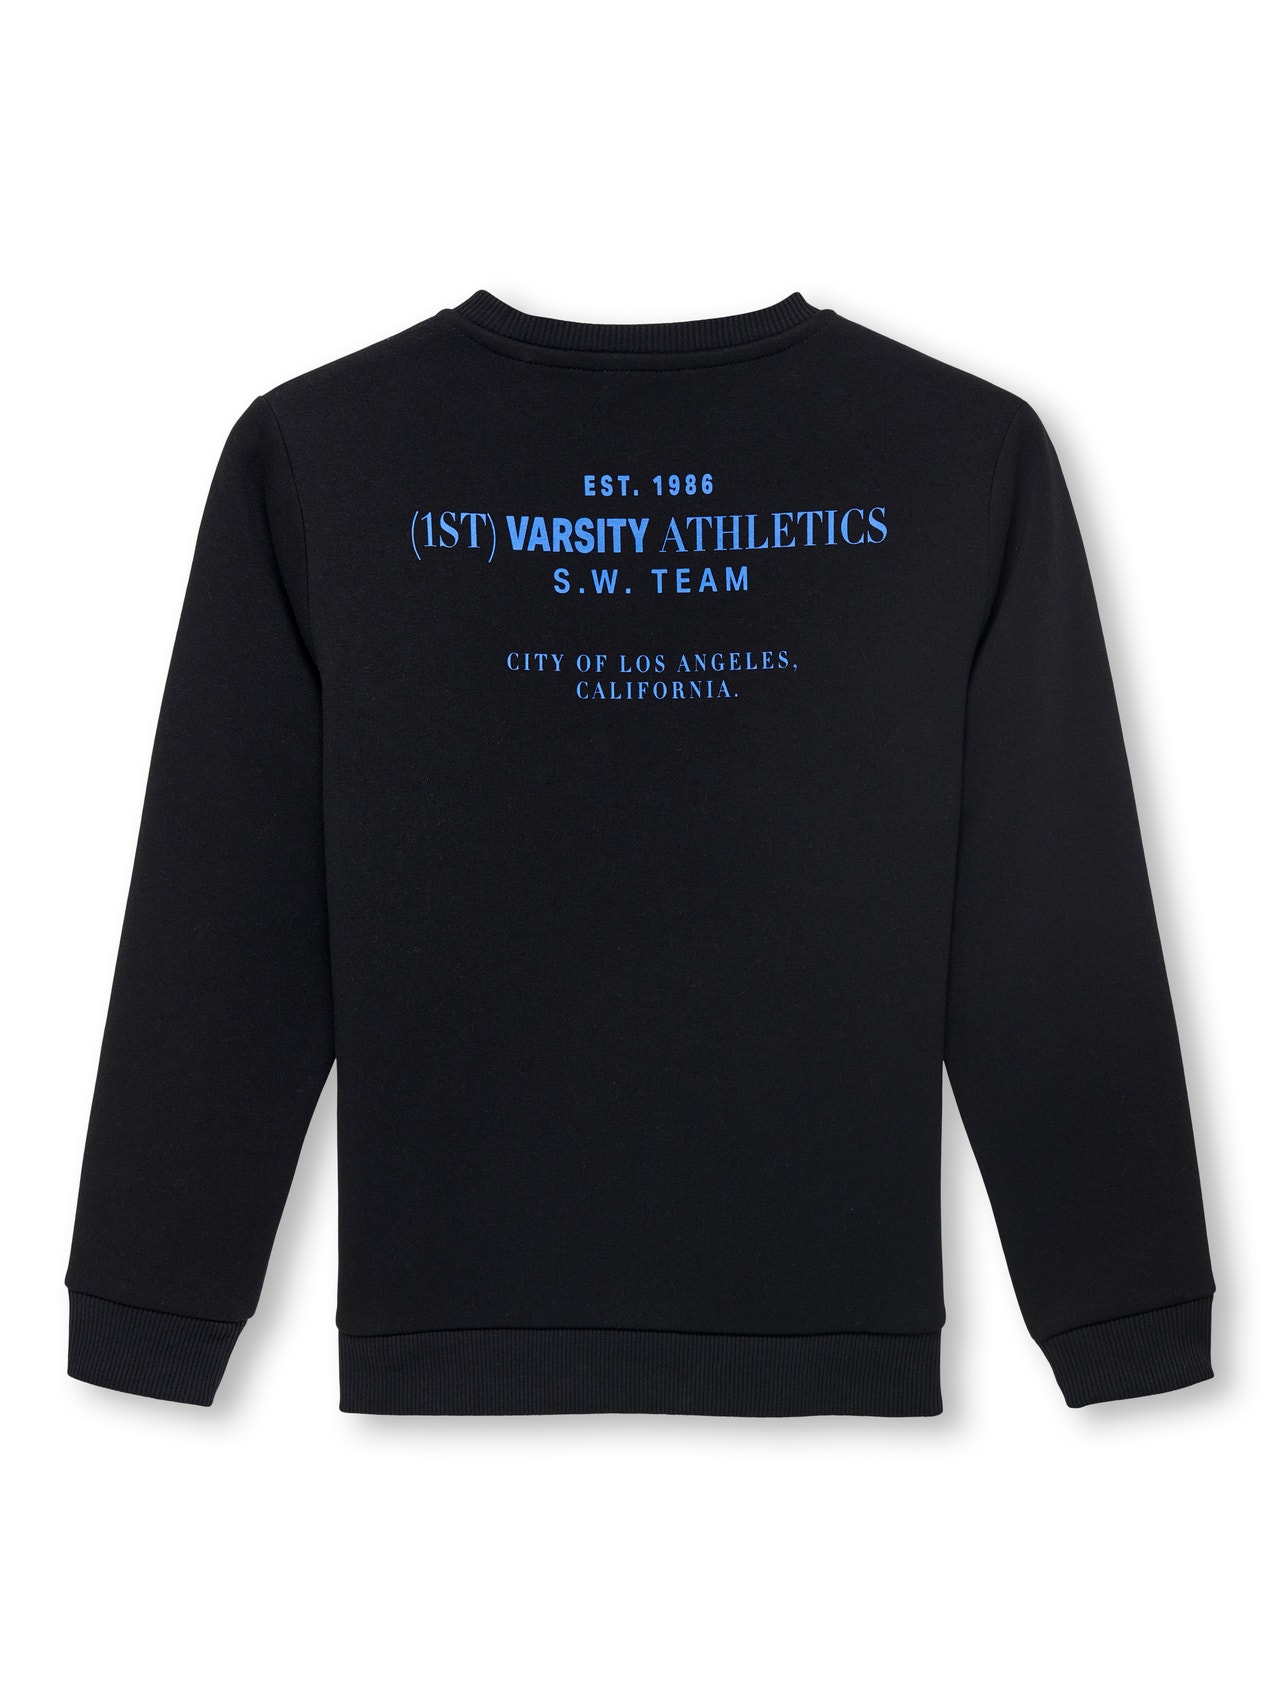 ONLY Print Sweatshirt -Black - 15270815